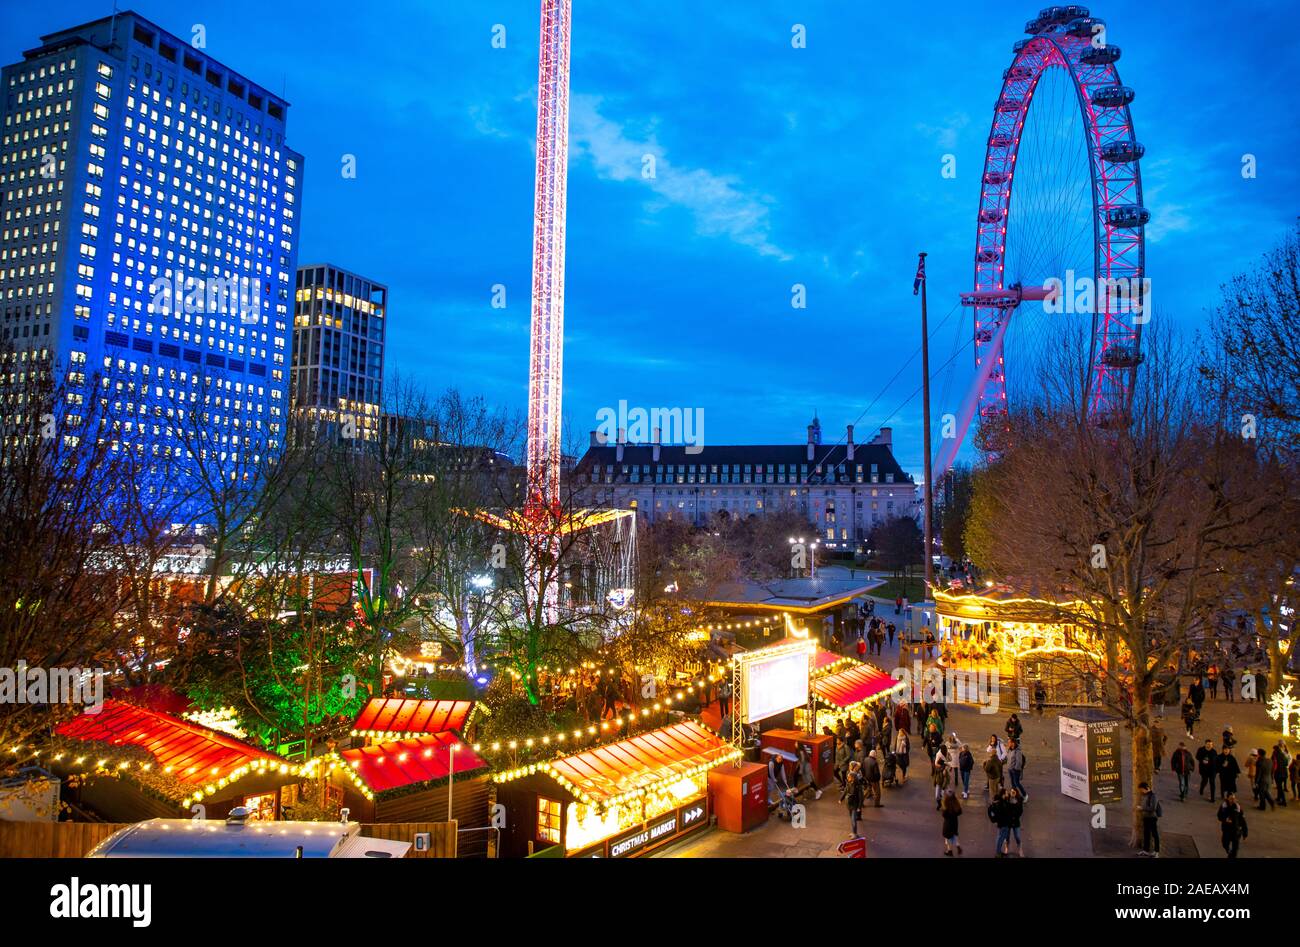 London, Christmas Market on the Thames, Winter Festival at Southbank Centre, London Eye Ferris Wheel, River Promenade, Stock Photo